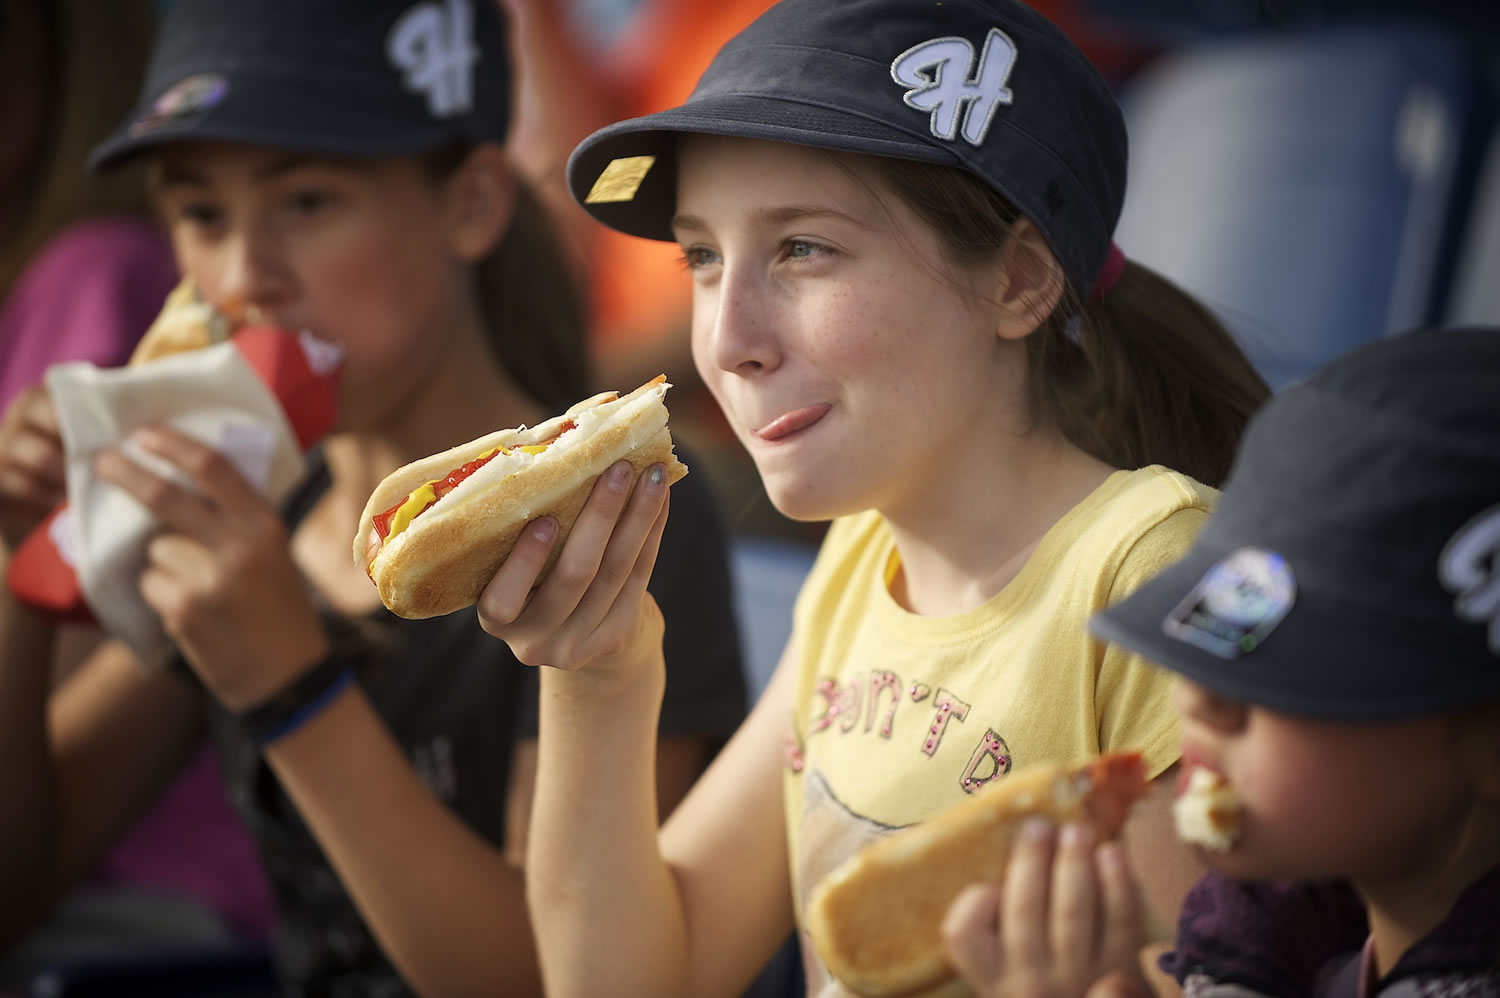 Sierra Carter, center, of Vancouver, enjoys a hot dog with her sisters during the home opener for the Hillsboro Hops against the Eugene Emeralds at Hillsboro Ballpark.